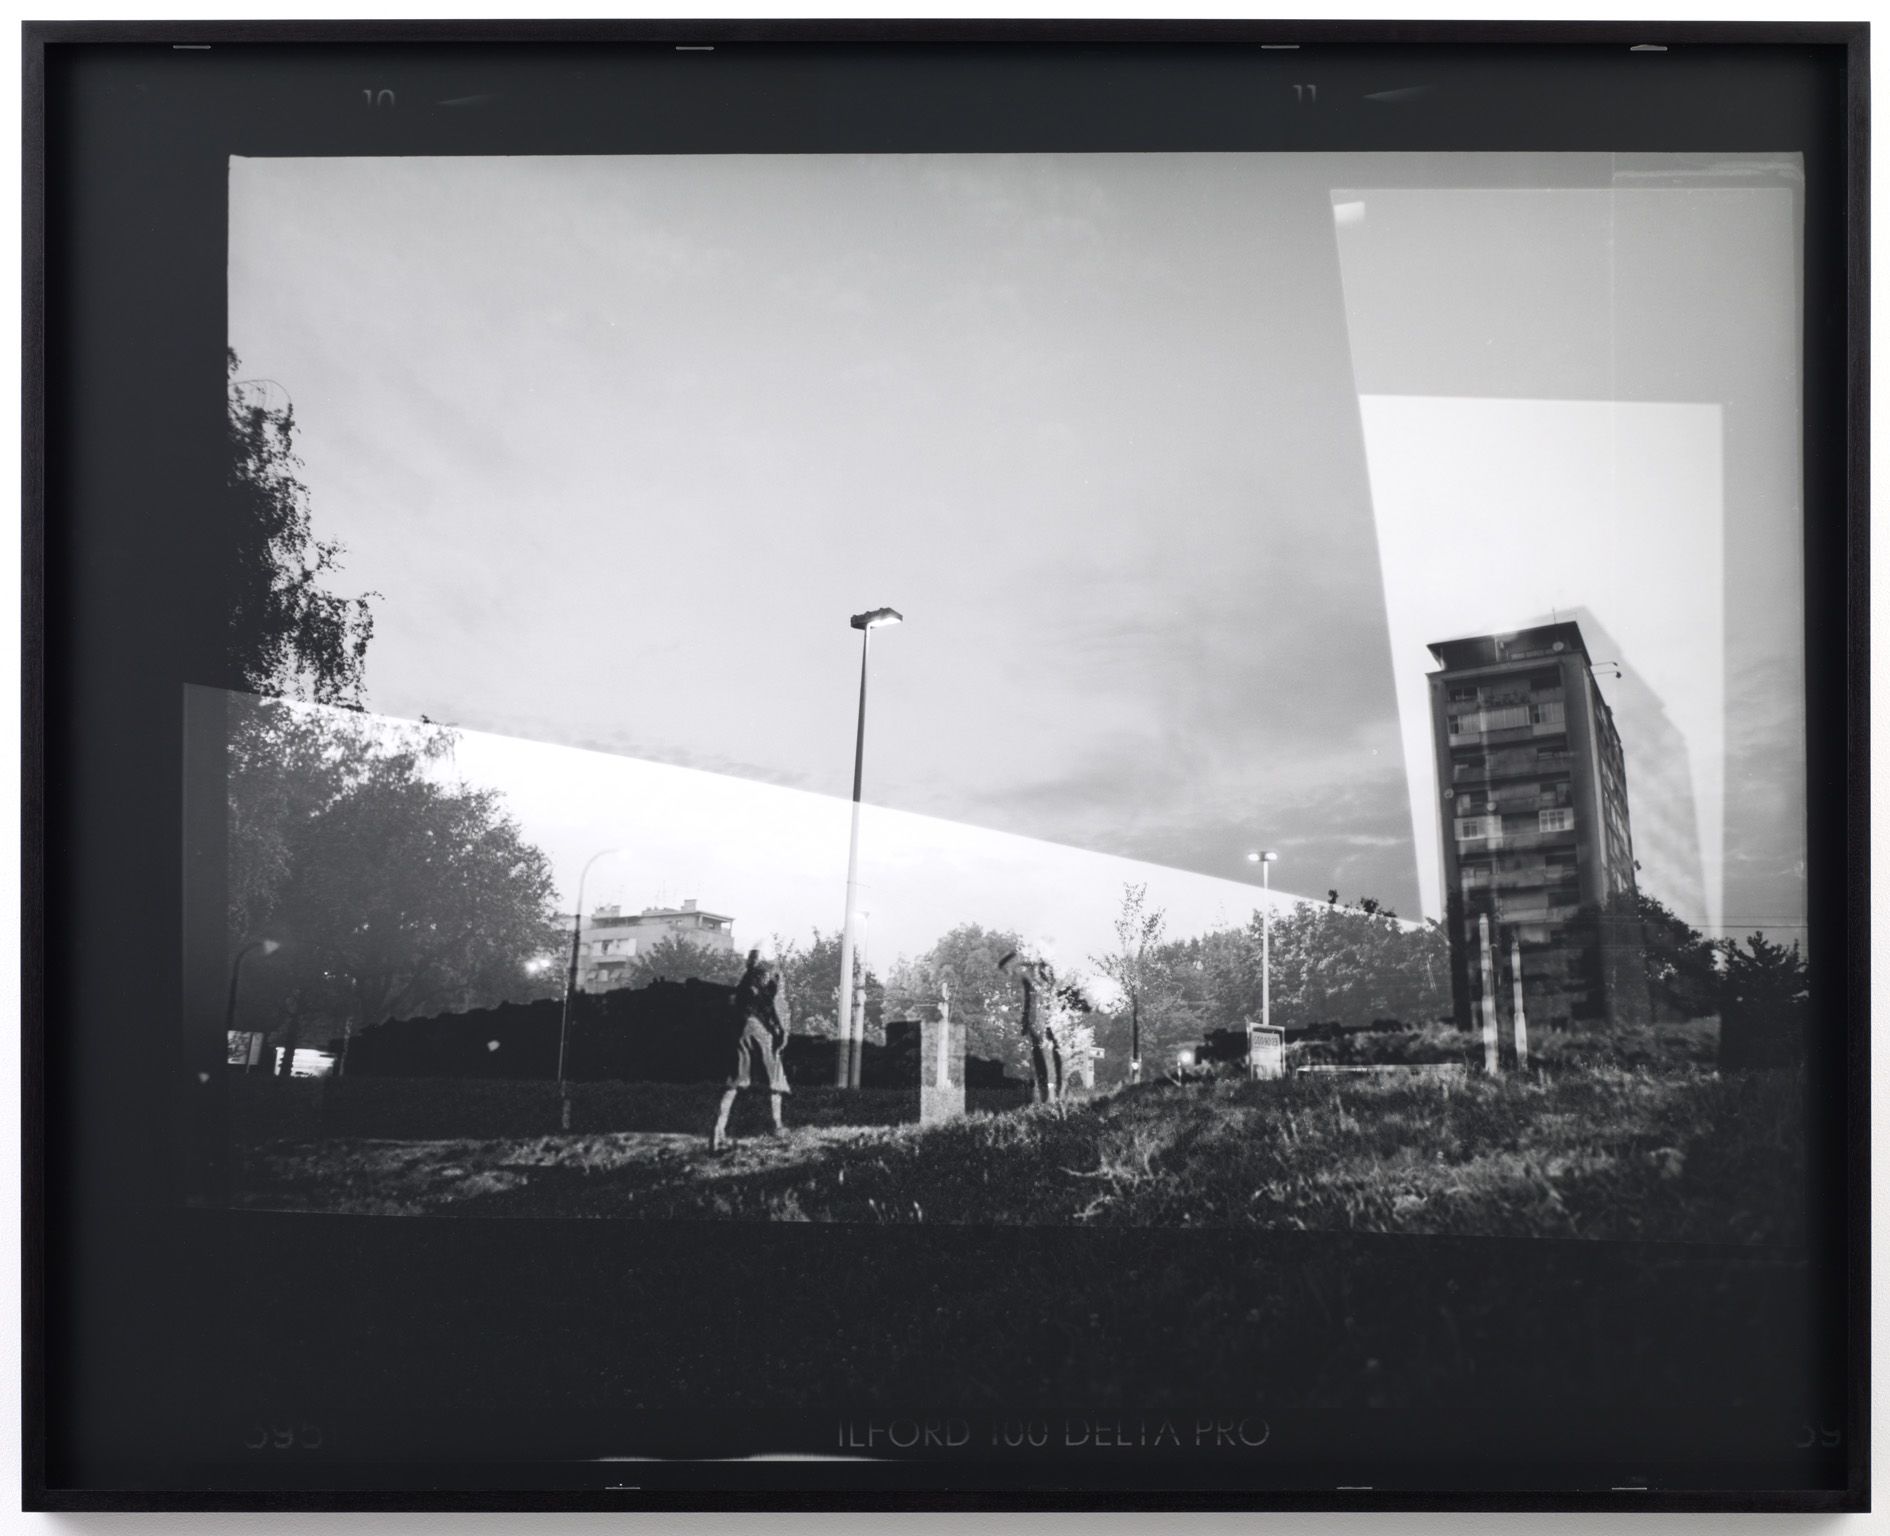 David Maljkovic – Recalling Frames – London